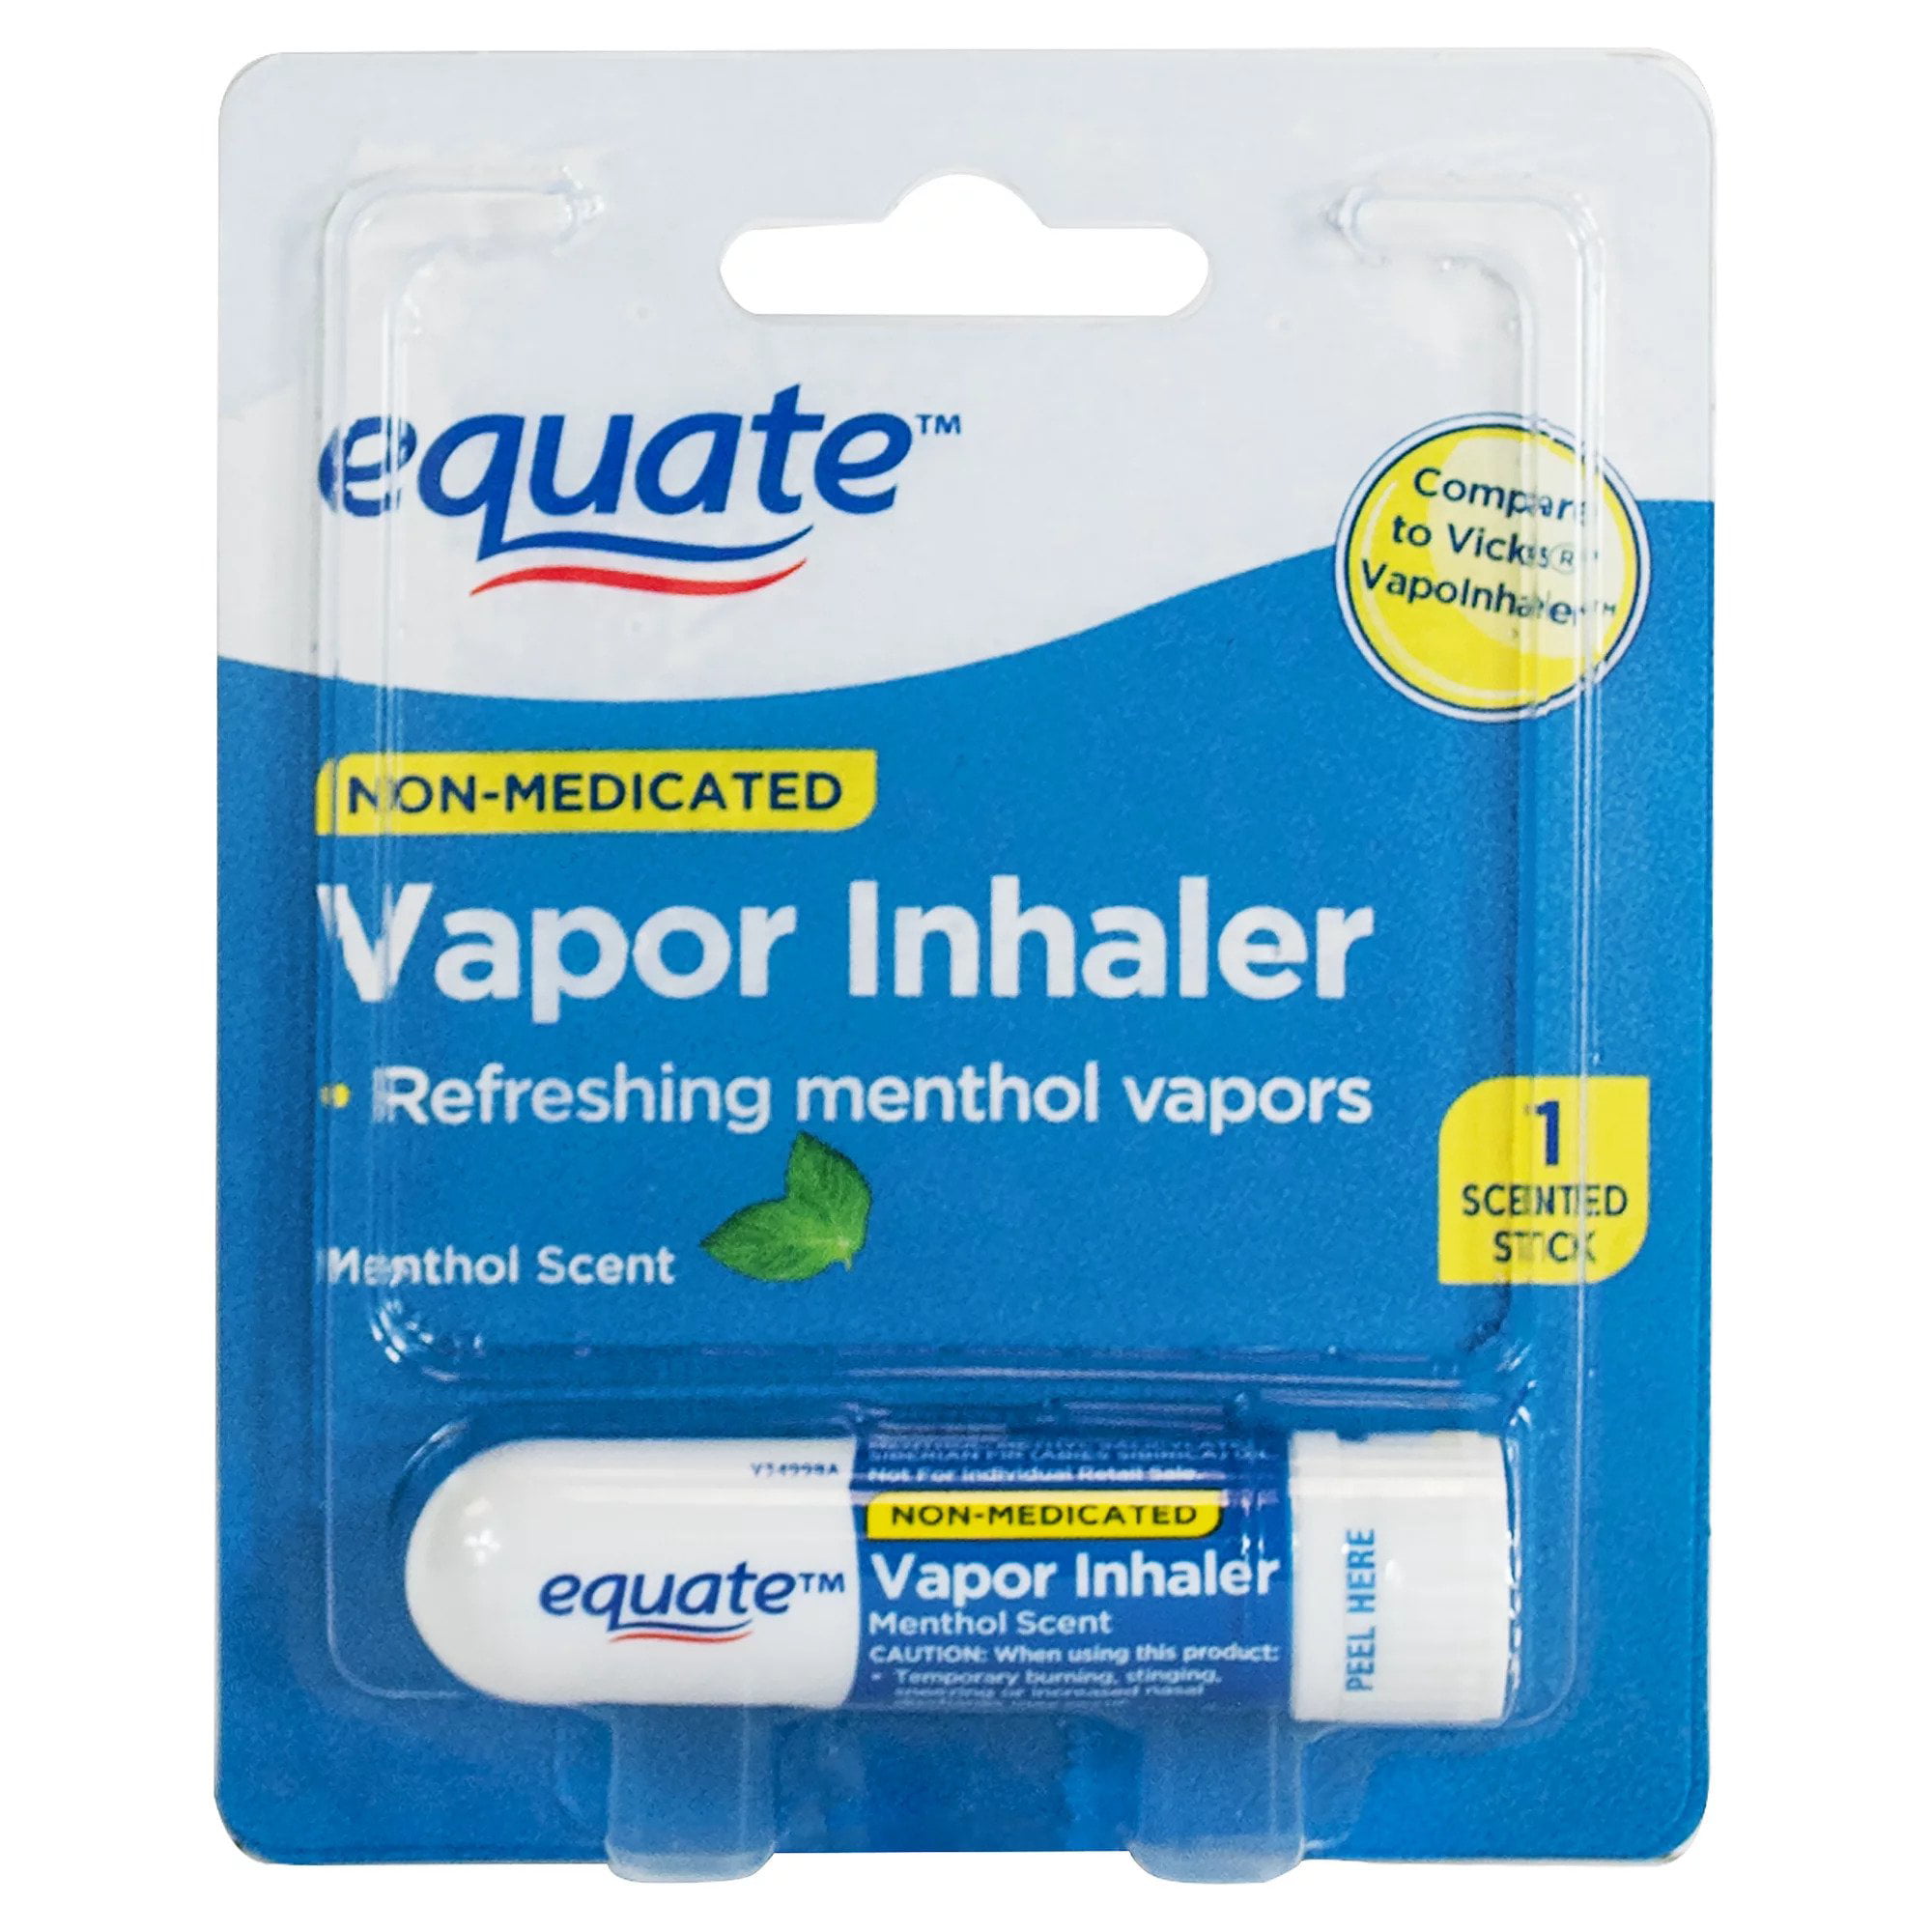 Vaporal Inhalador 12pc lot Of Inhalers For Nasal Congestion